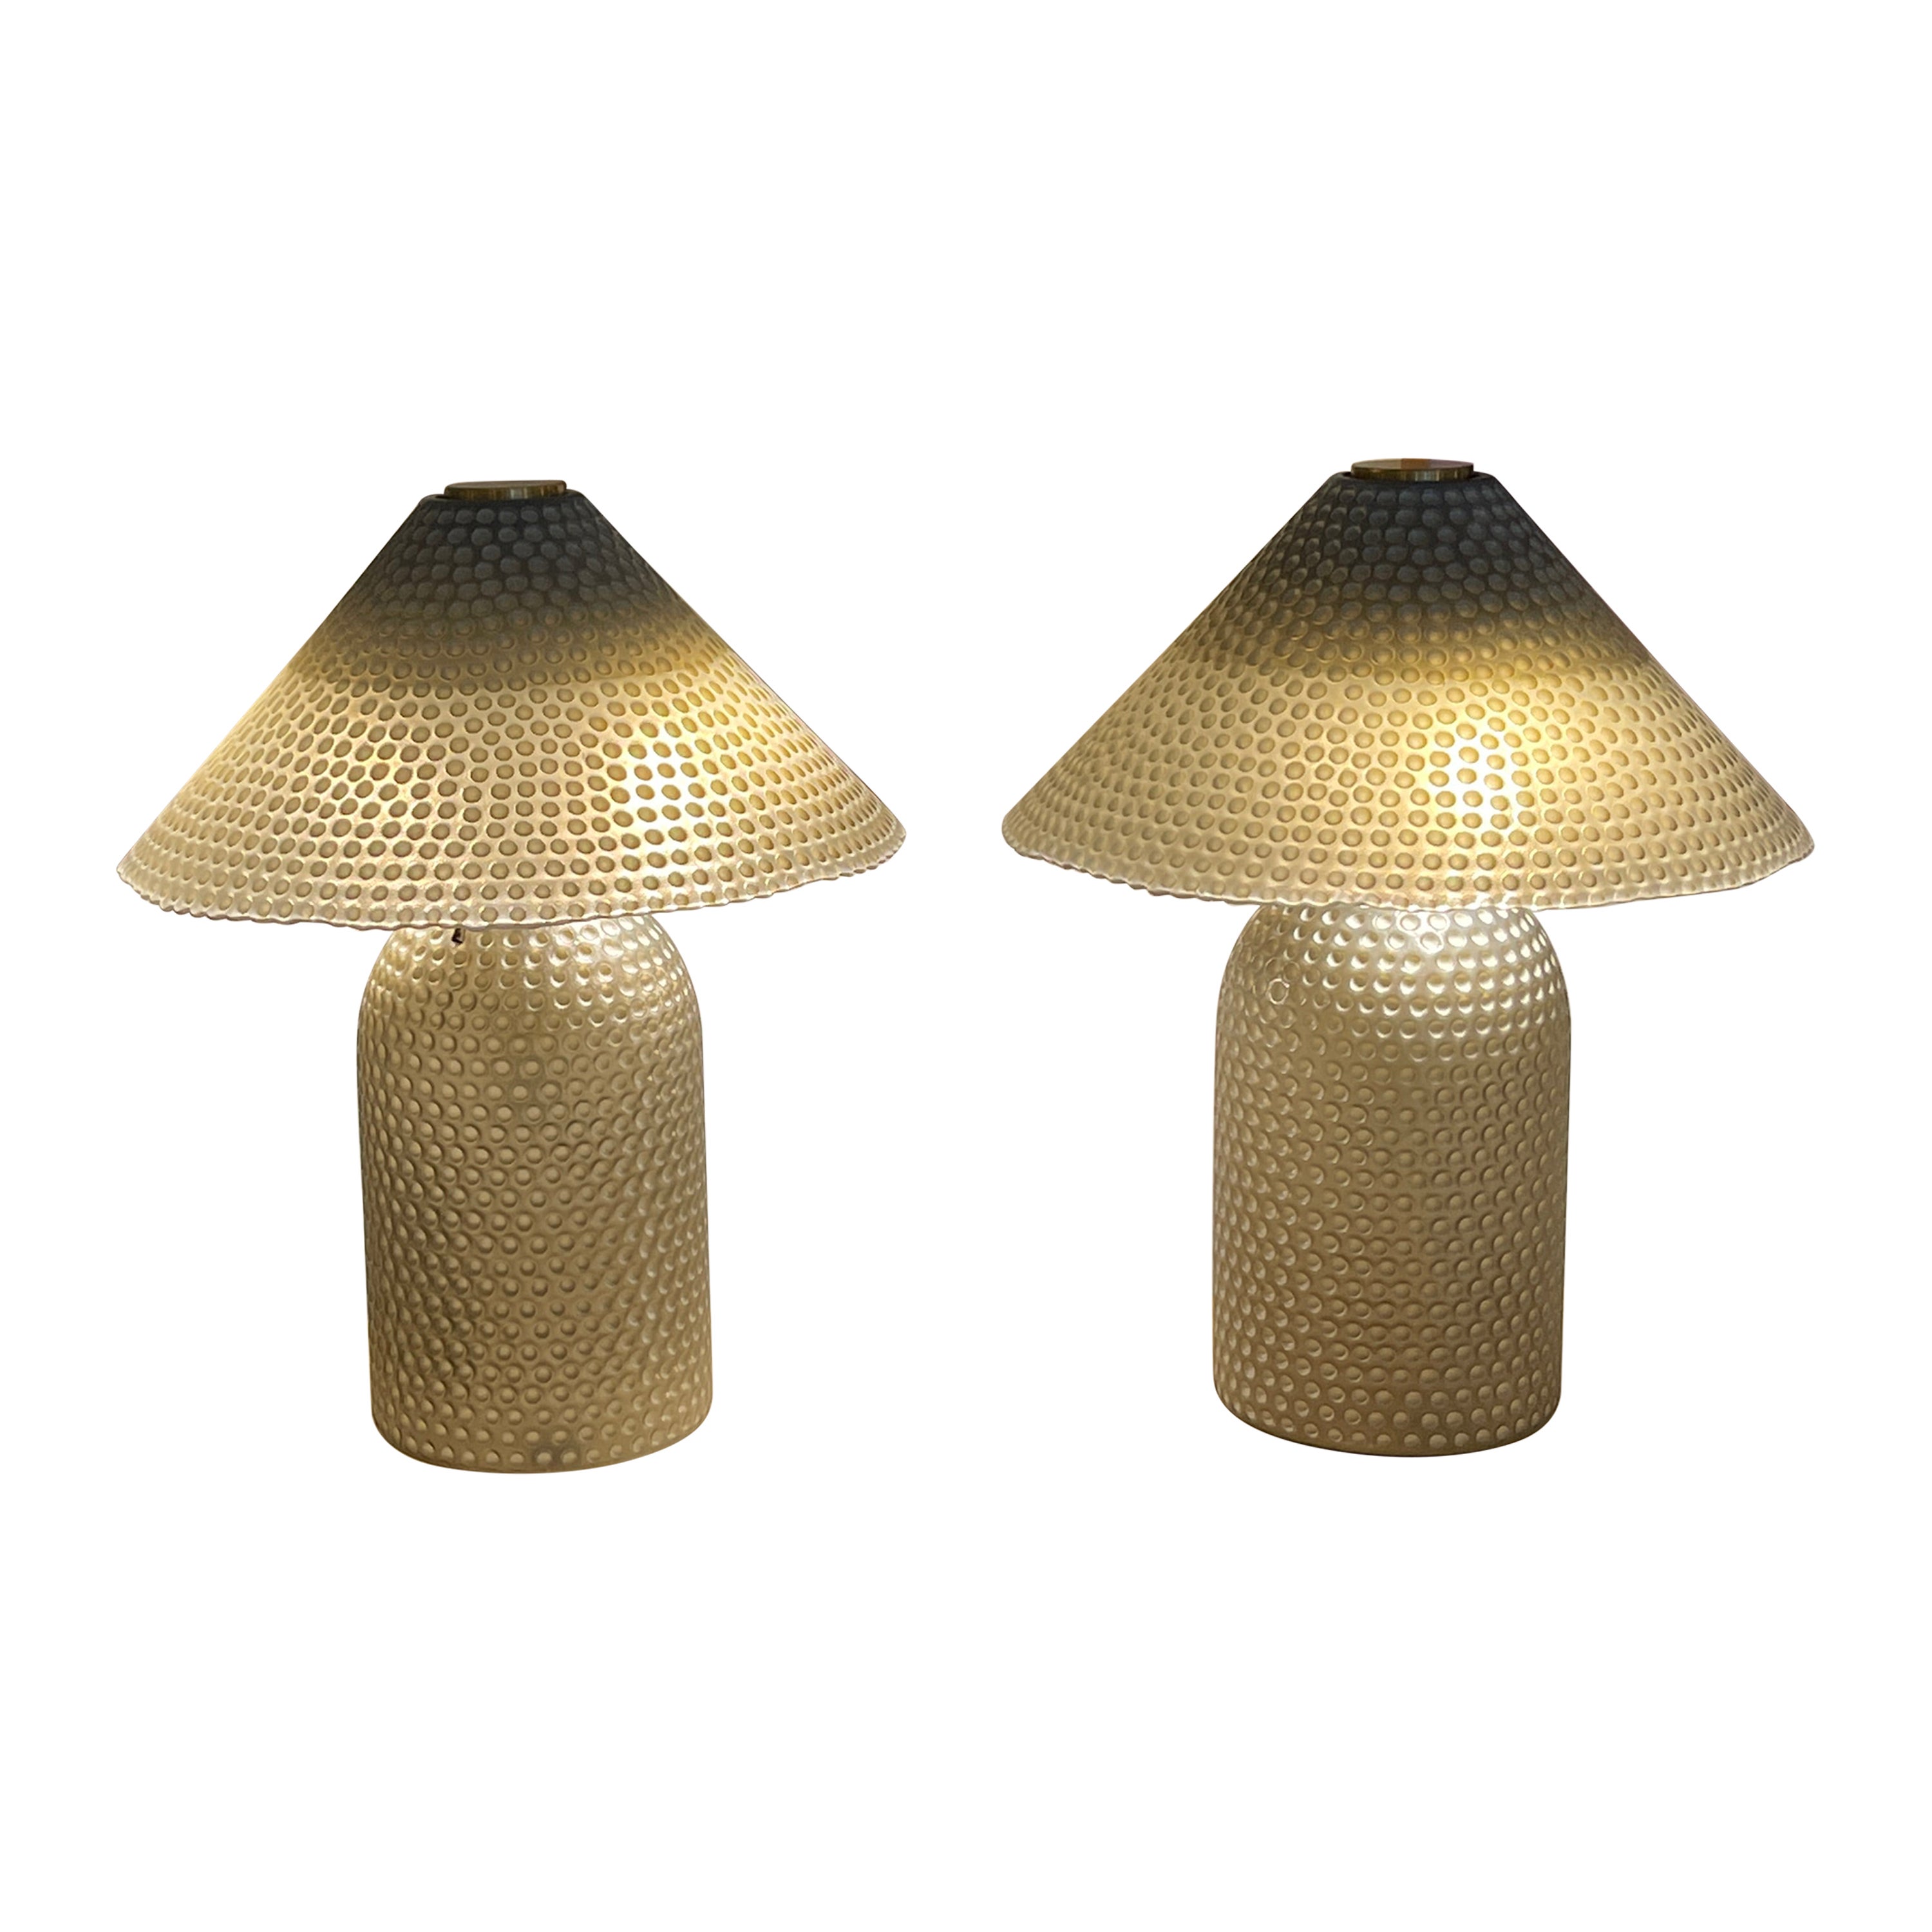 Pair of Venini Murano Lamps in Hammered Glass